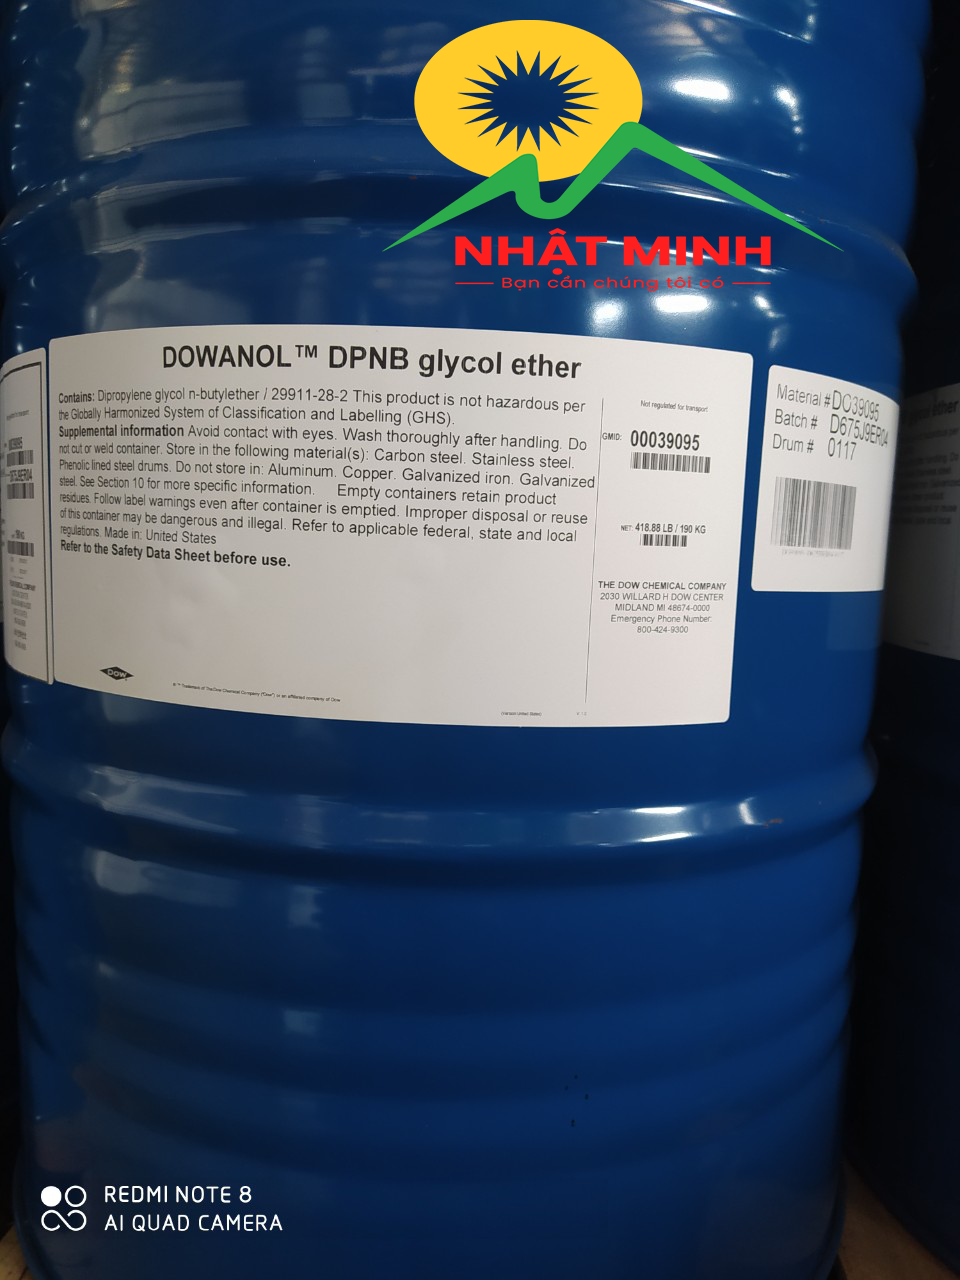 dipropylene glycol butyl ether ( DPNB)